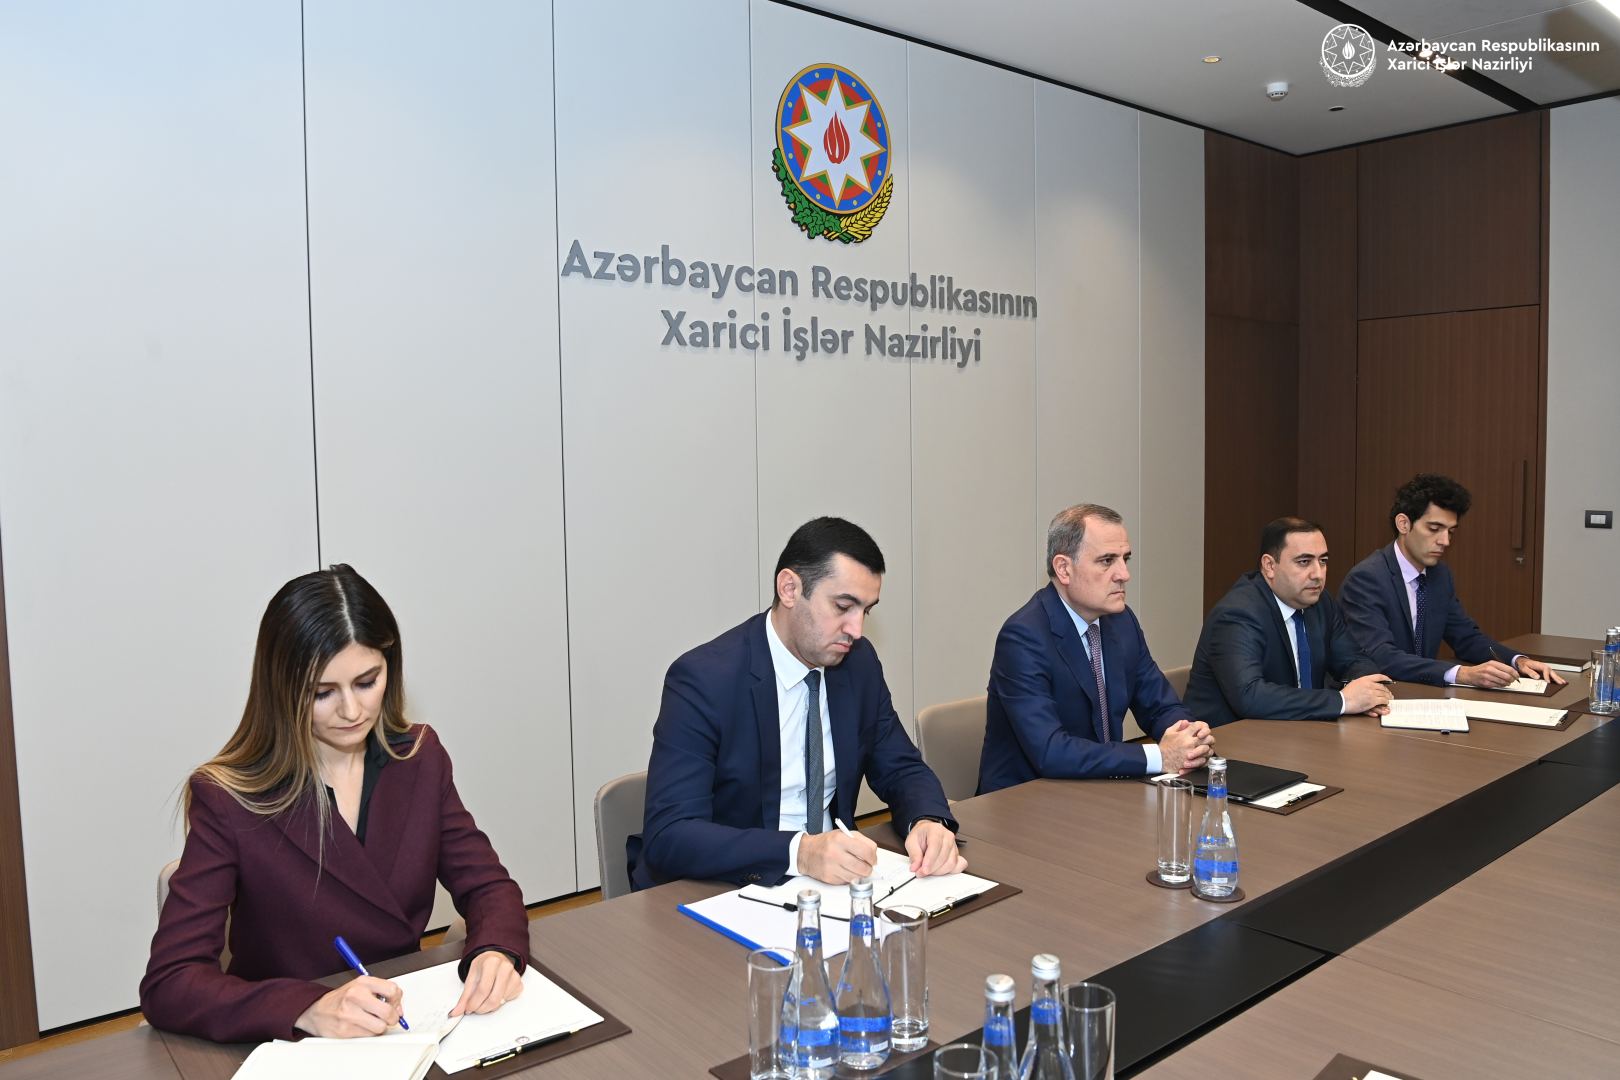 Джейхун Байрамов и Тойво Клаар обсудили вопросы нормализации отношений между Азербайджаном и Арменией (ФОТО)